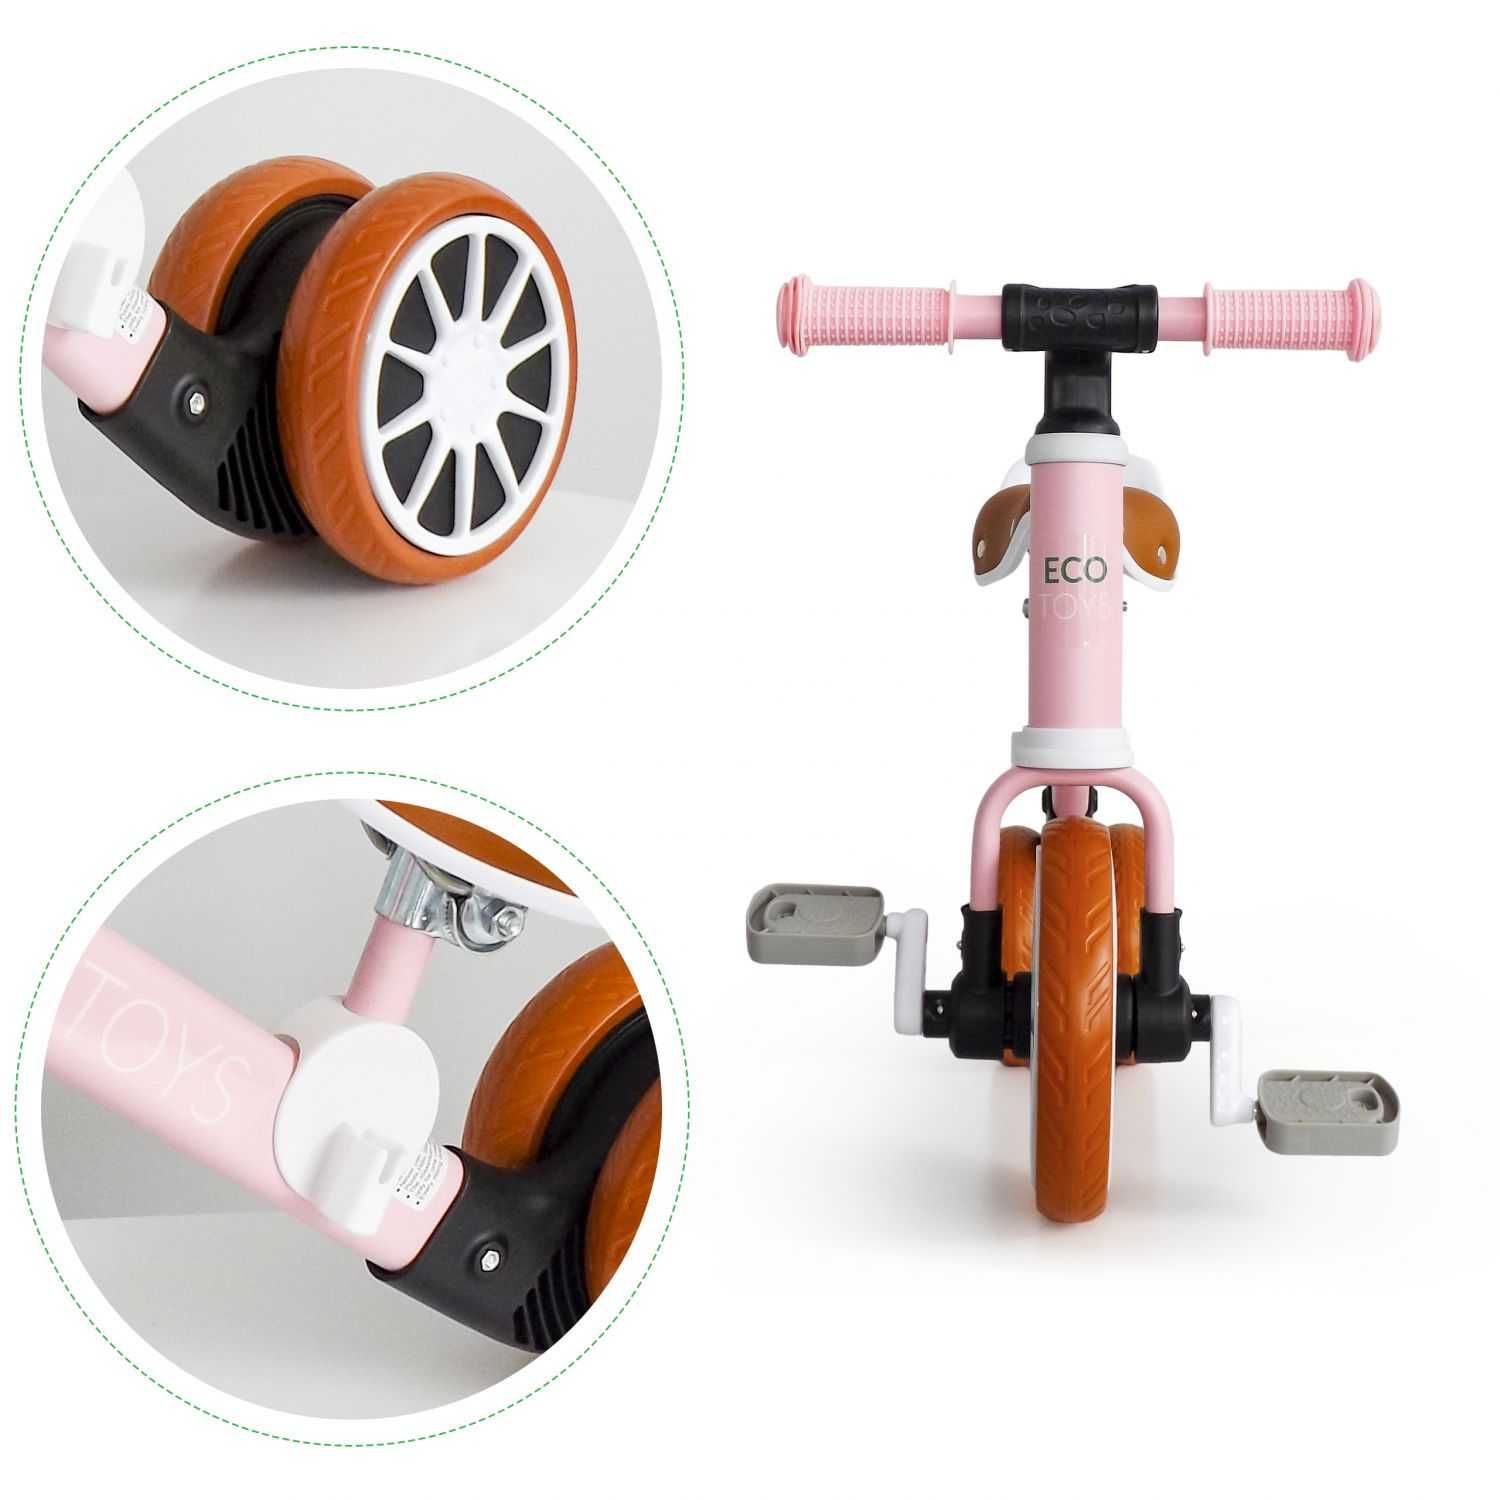 Tricicleta 2 in 1 cu pedale detasabile, Roti spuma EVA Tubeless, roz